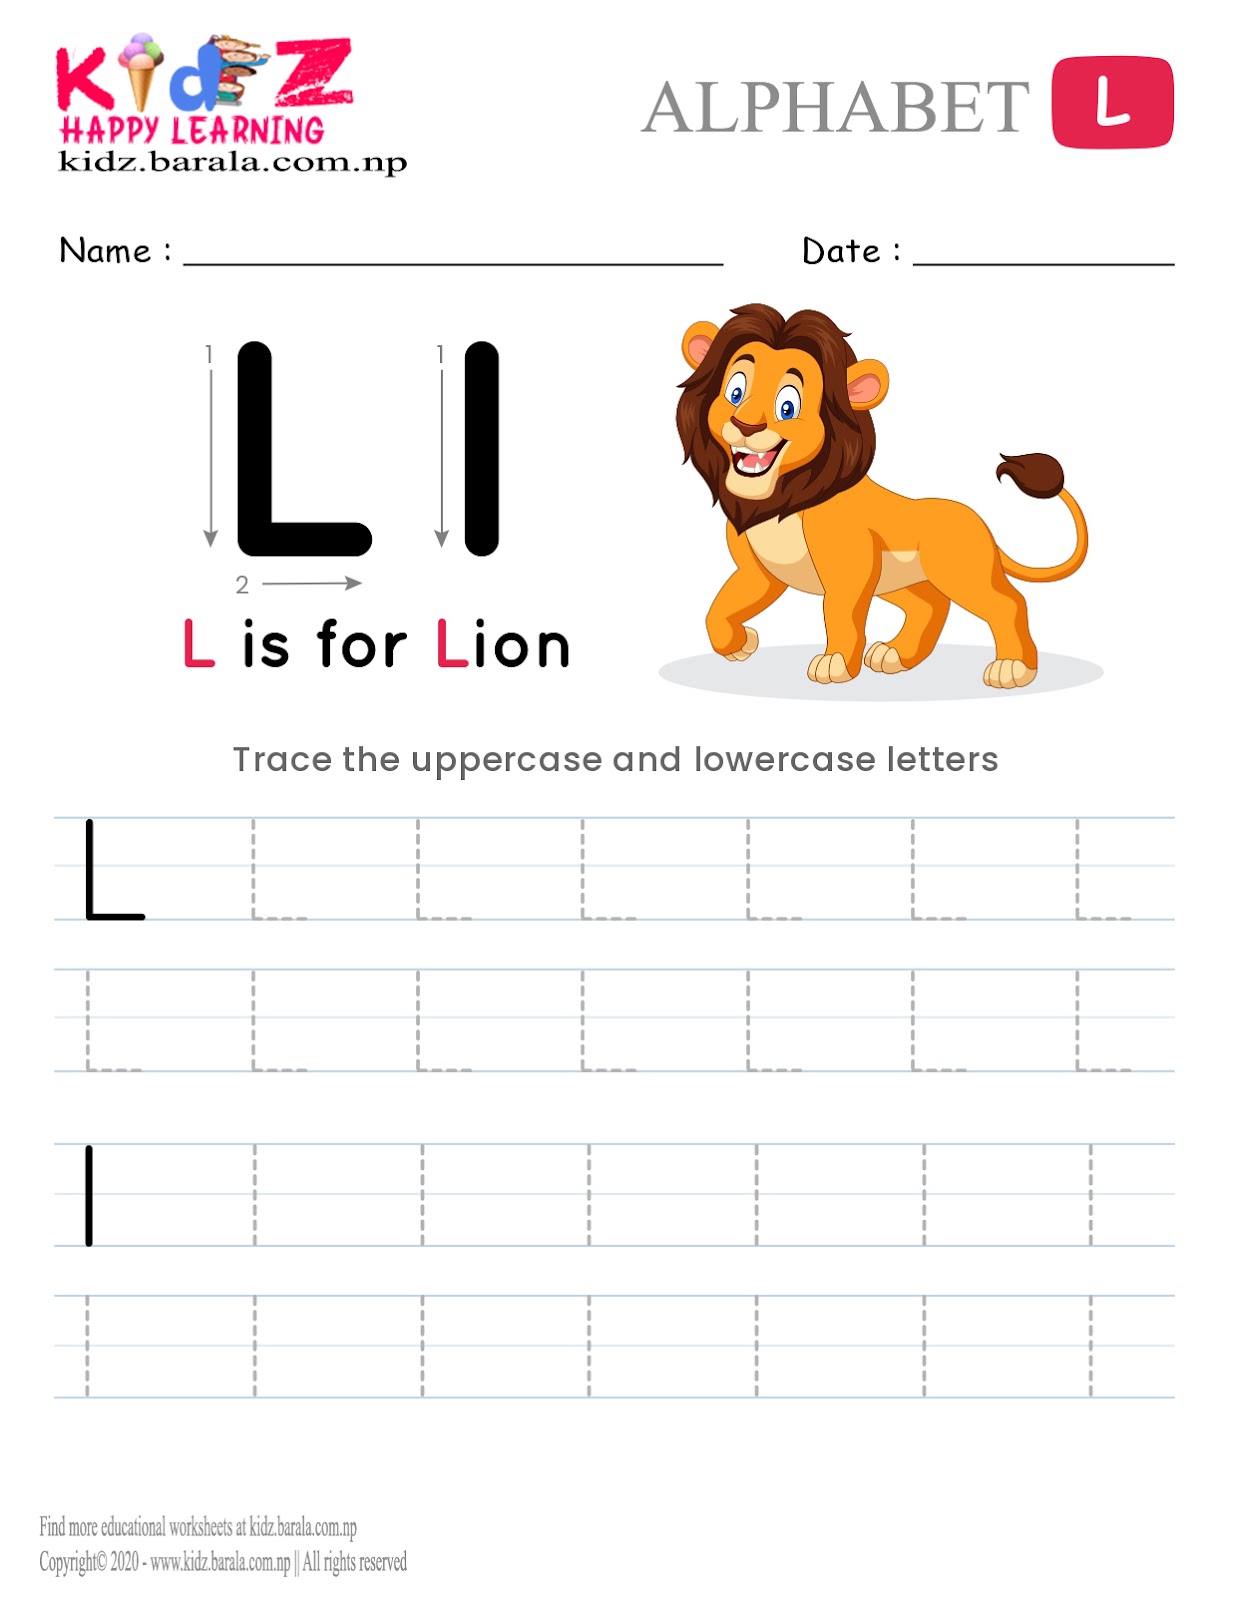 Alphabet L tracing worksheet free download .pdf